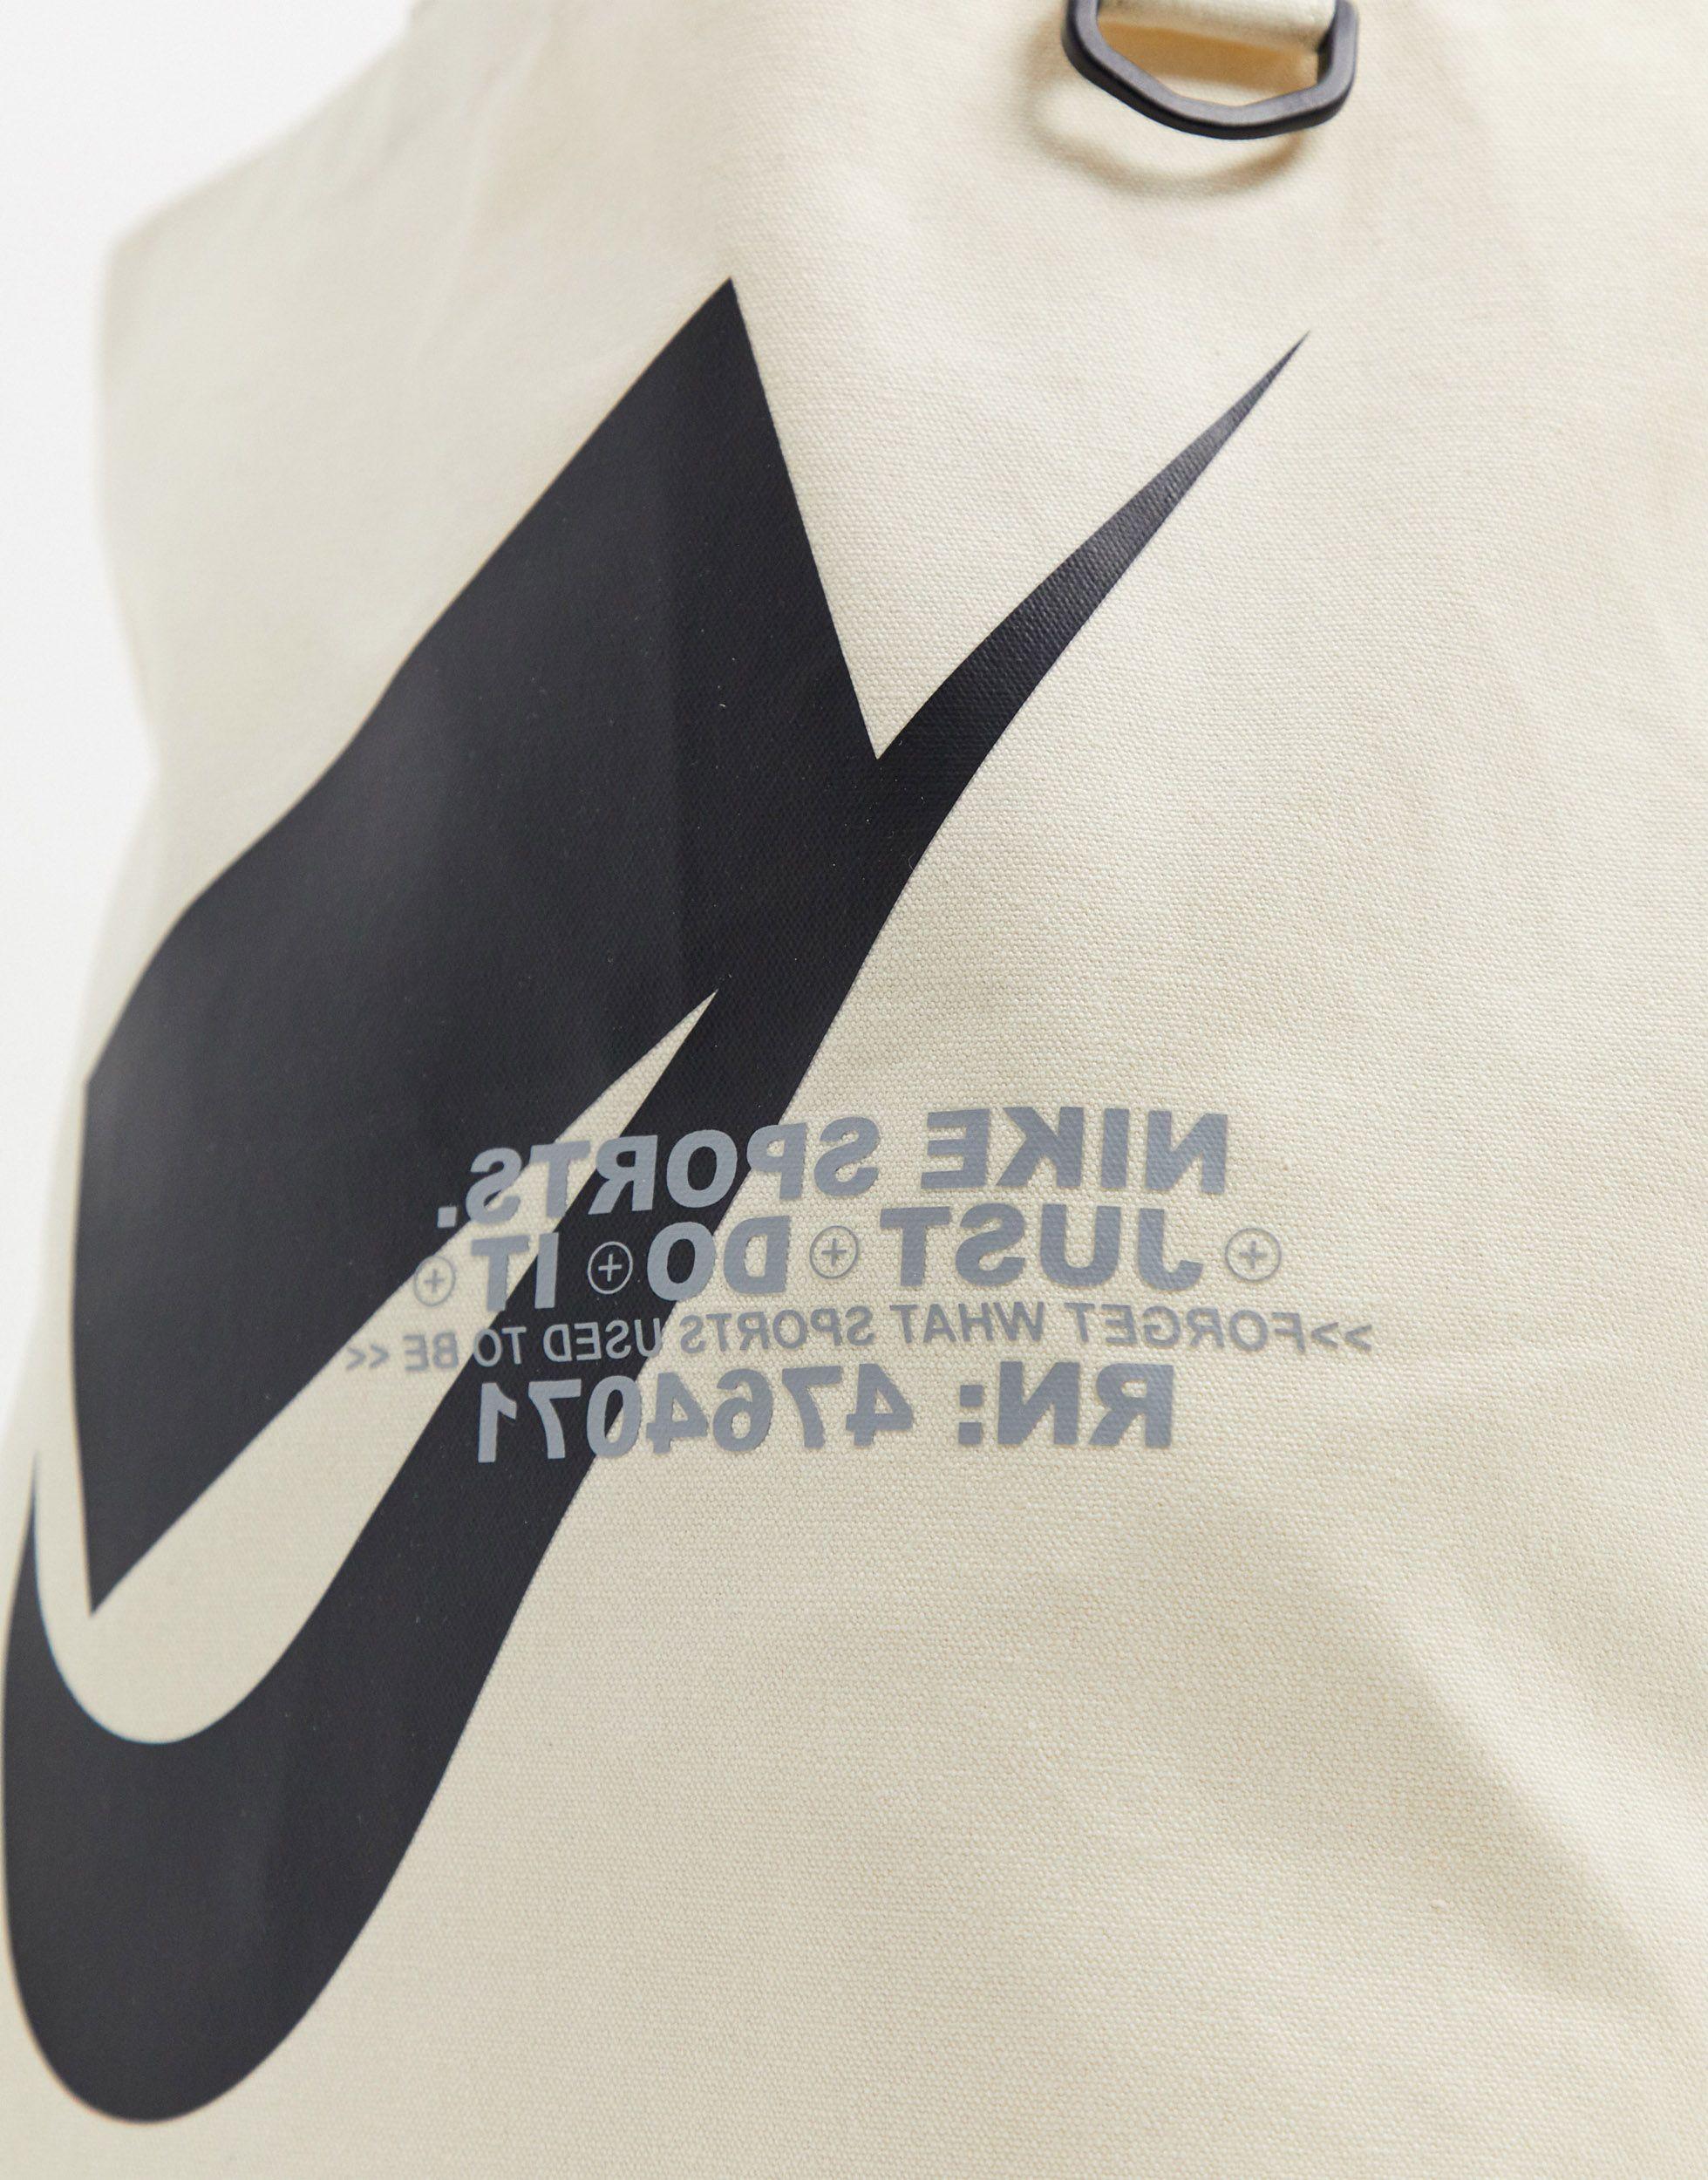 Nike Swoosh Logo Tote Bag in Black for Men